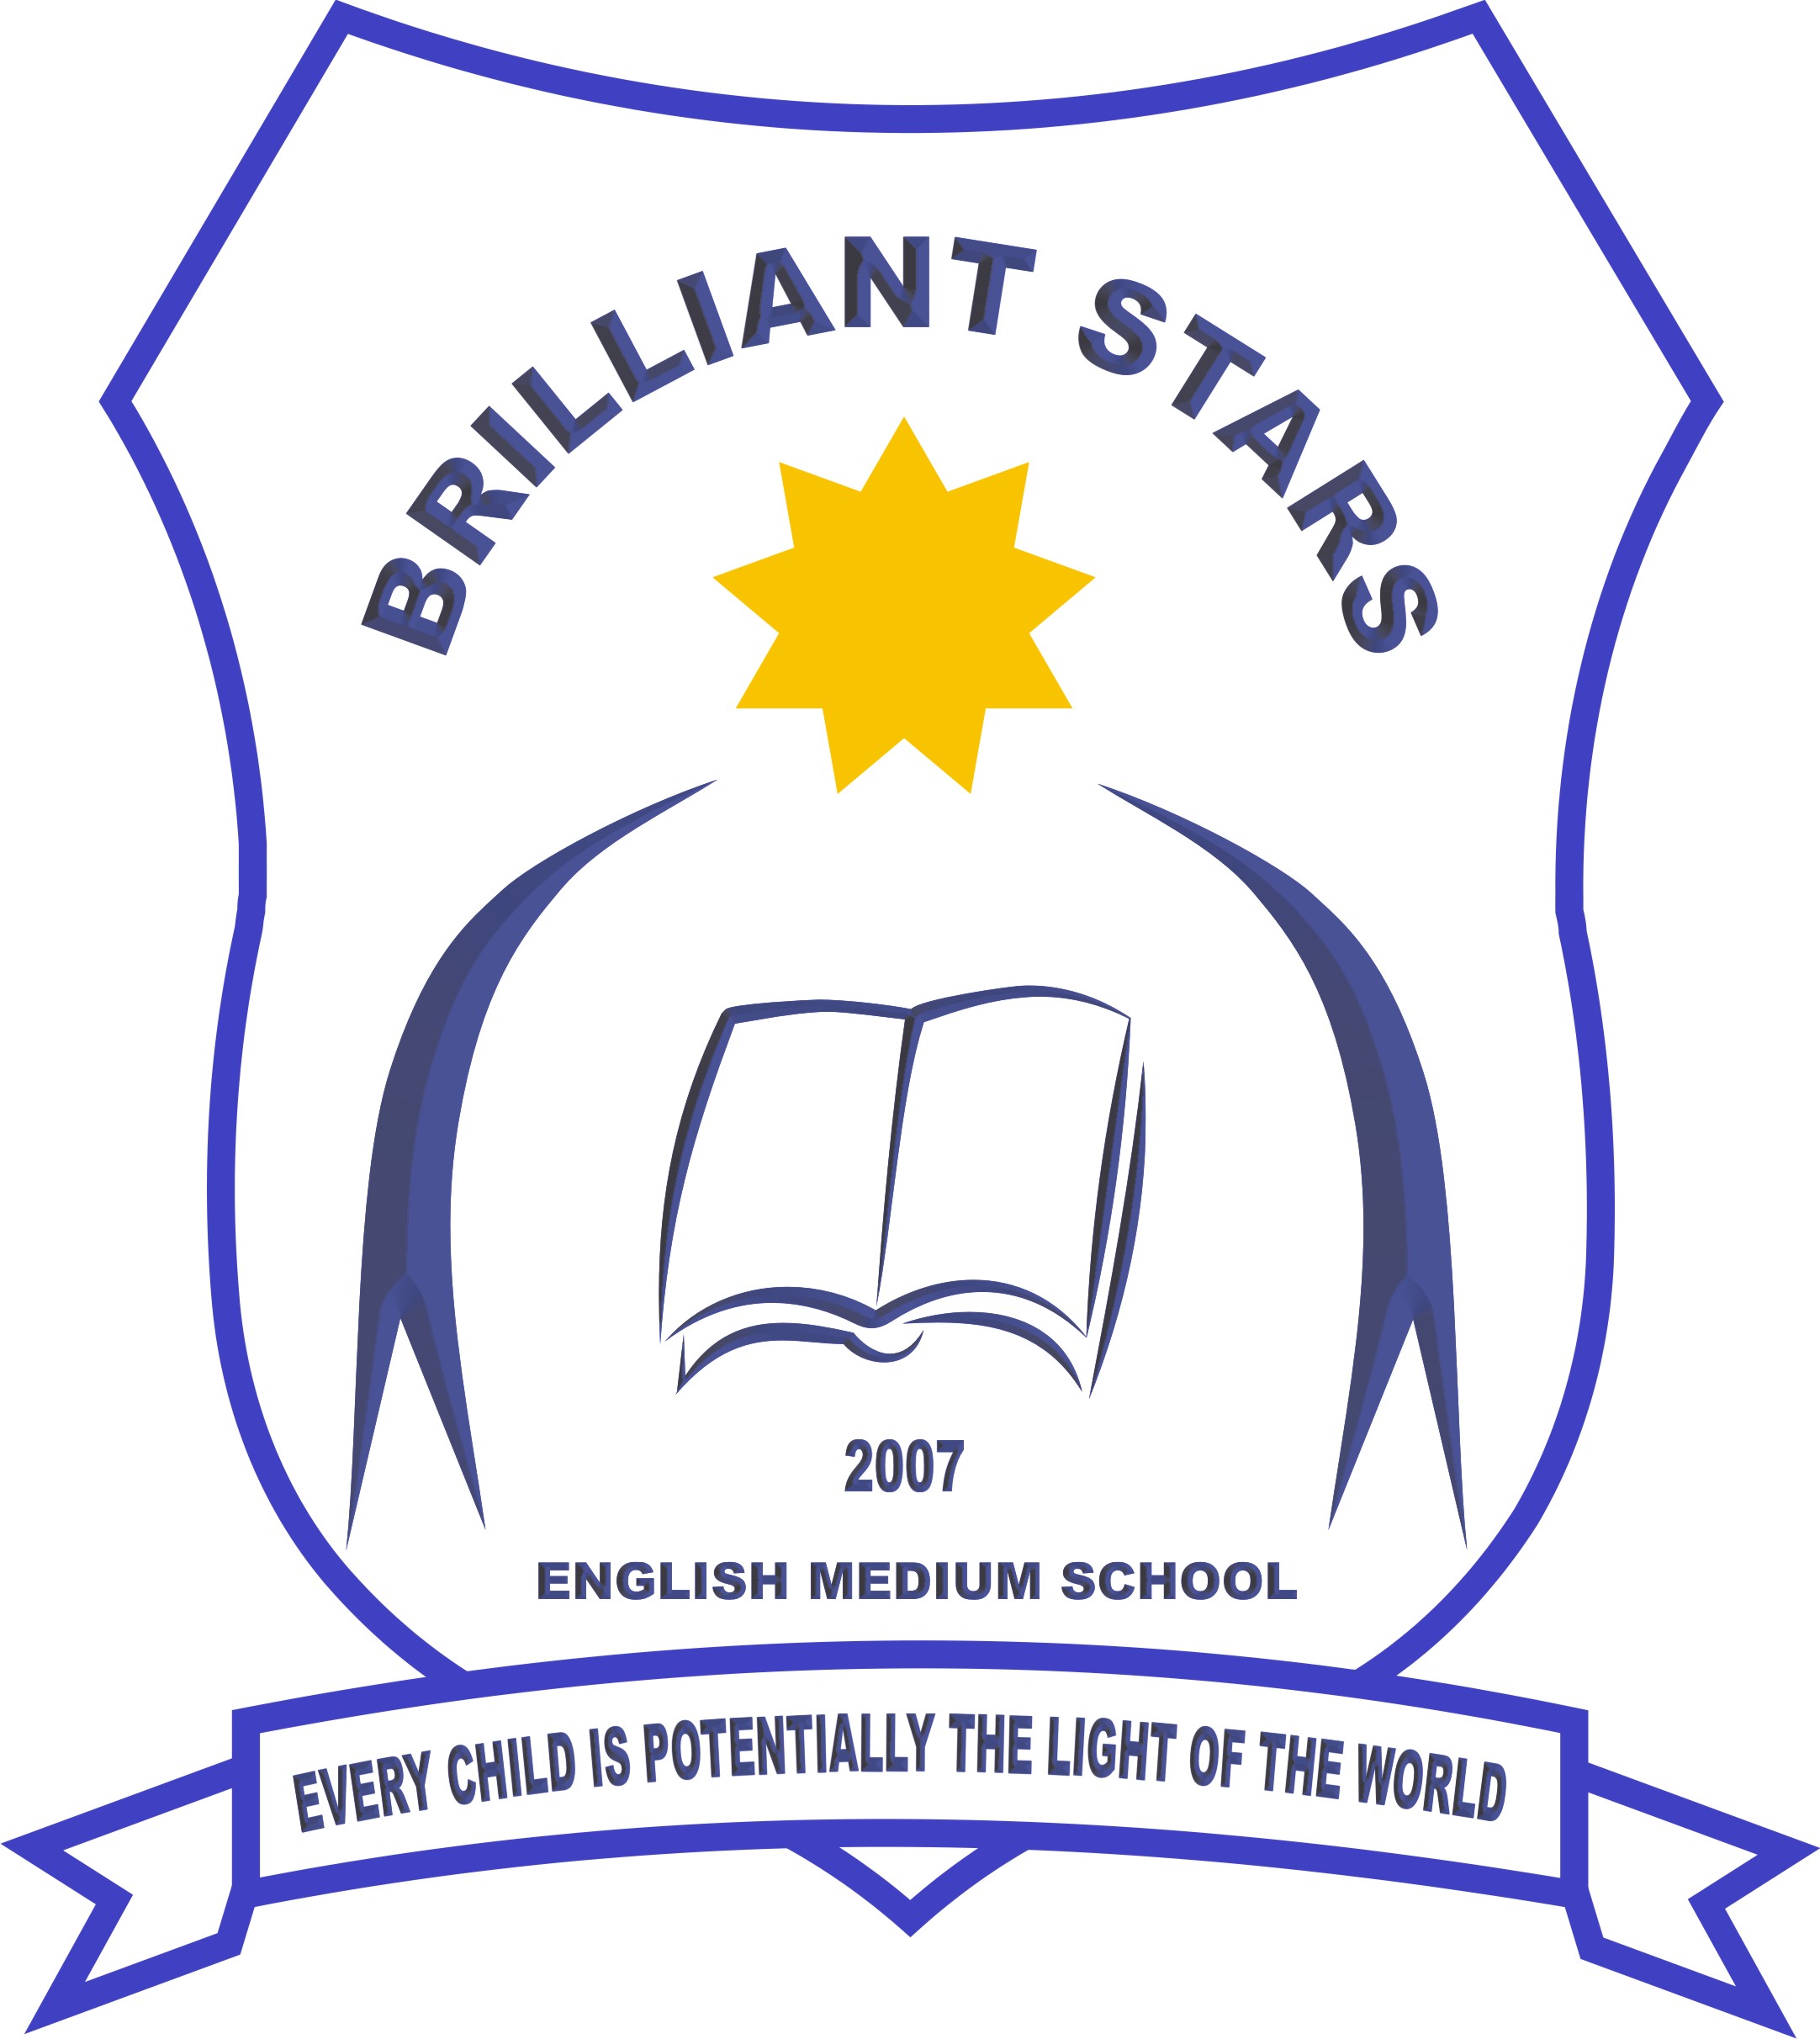 Brilliant Stars logo